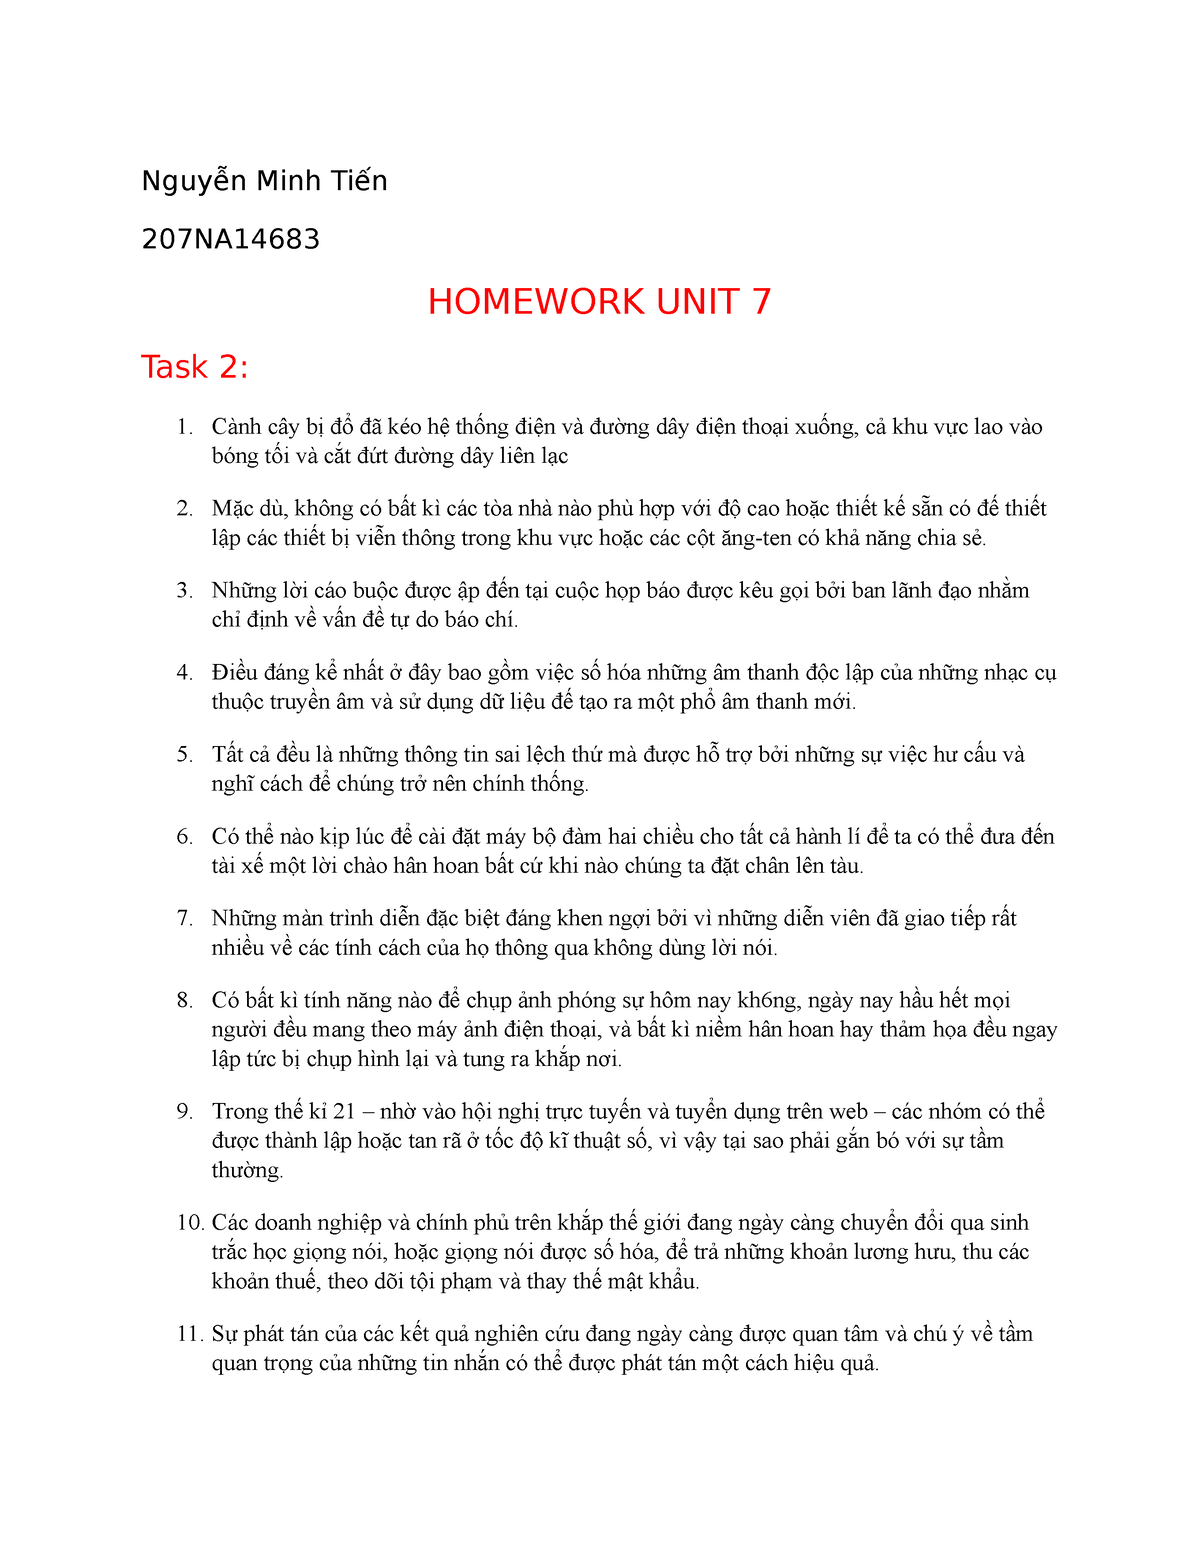 Homework Unit 7 - asdasdas - Tin học cơ bản - Studocu